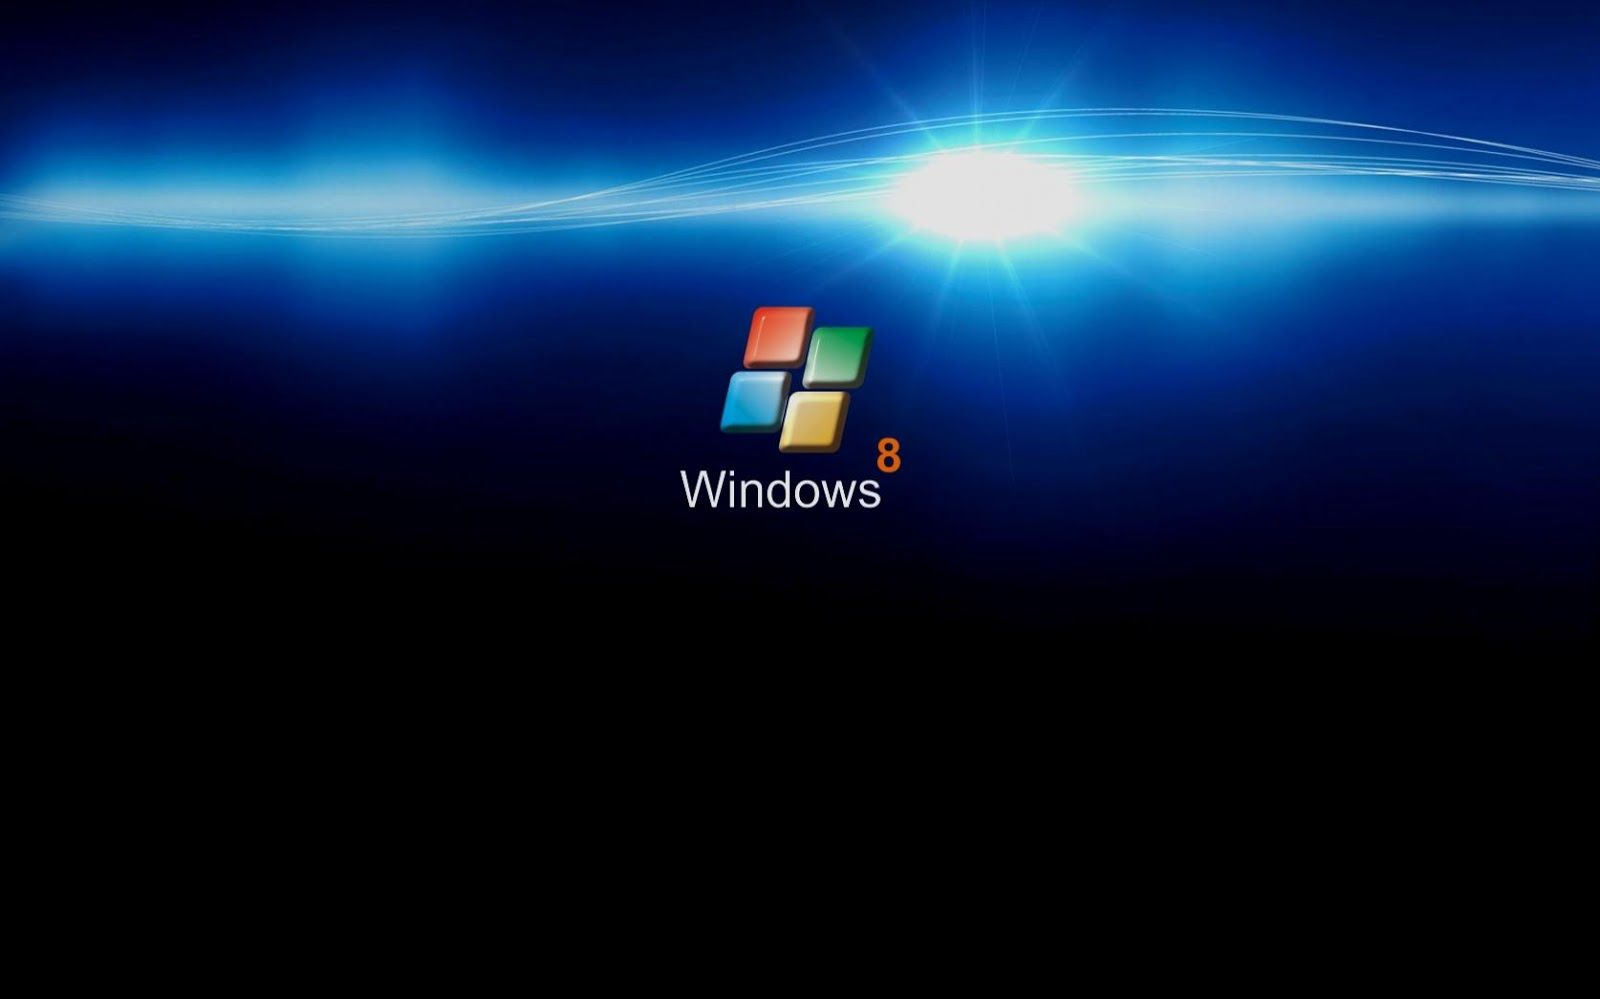 Windows 8 Hd - HD Wallpaper 